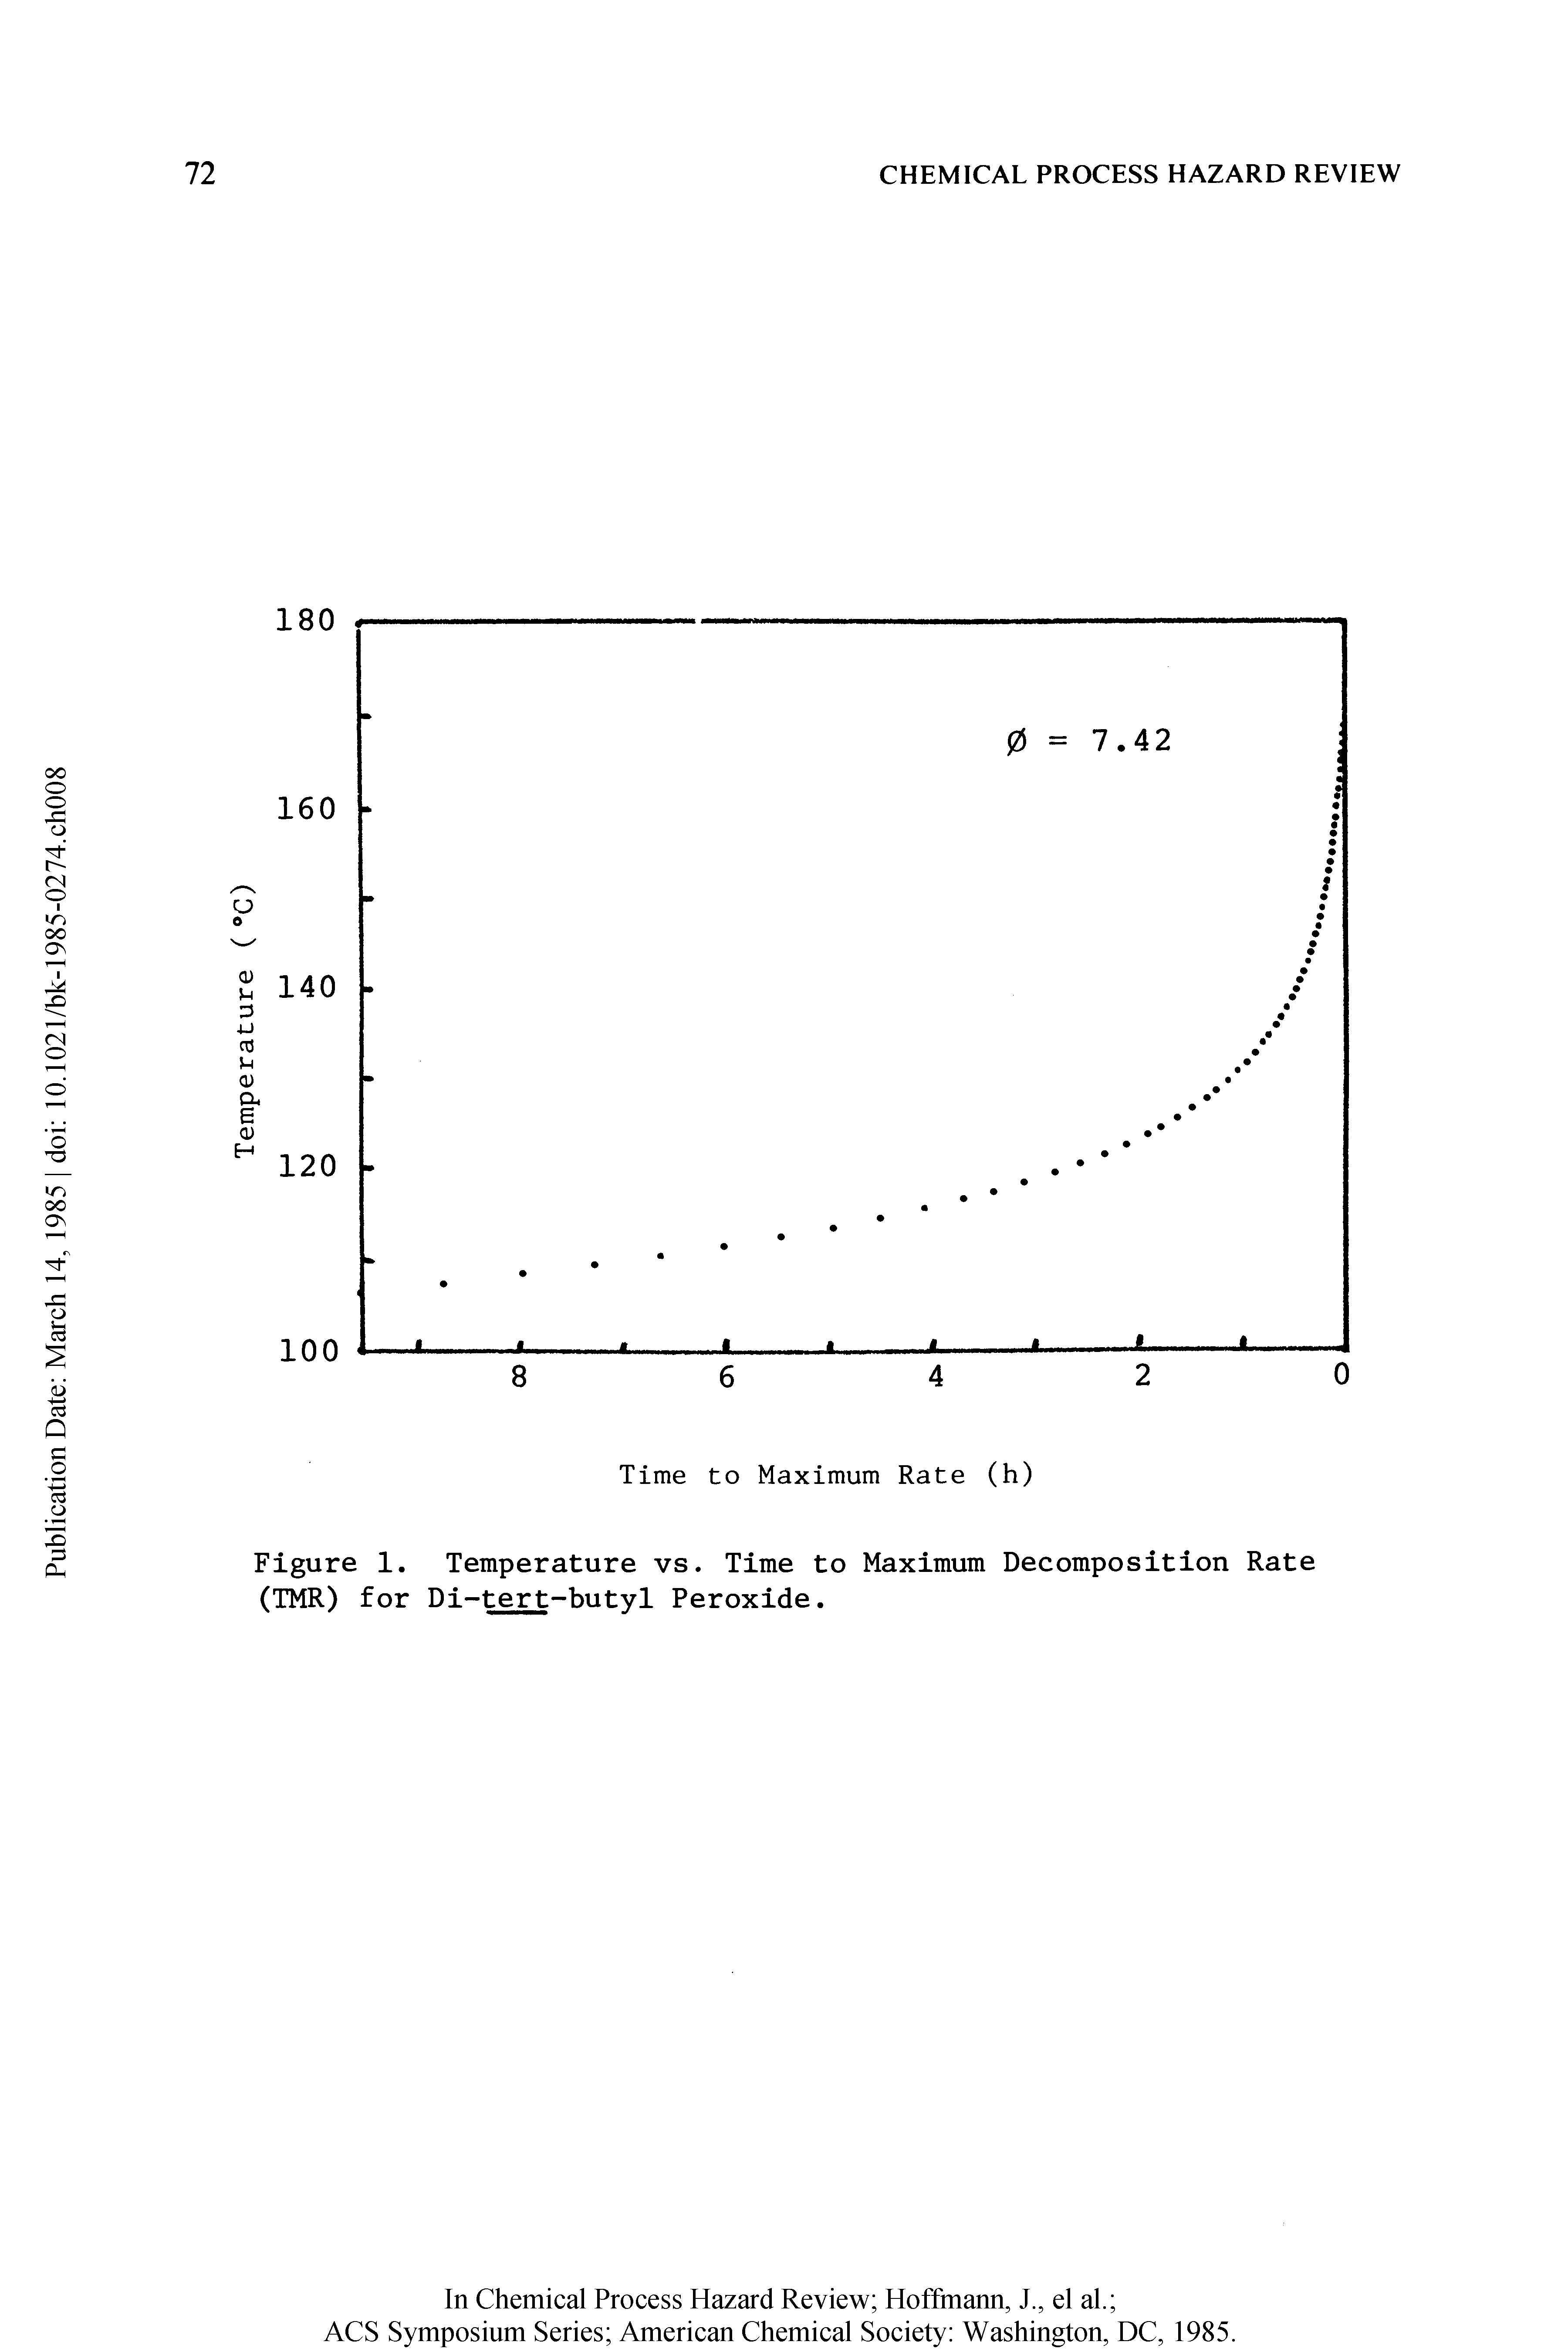 Figure 1. Temperature vs. Time to Maximum Decomposition Rate (TMR) for Di-tert-butyl Peroxide.